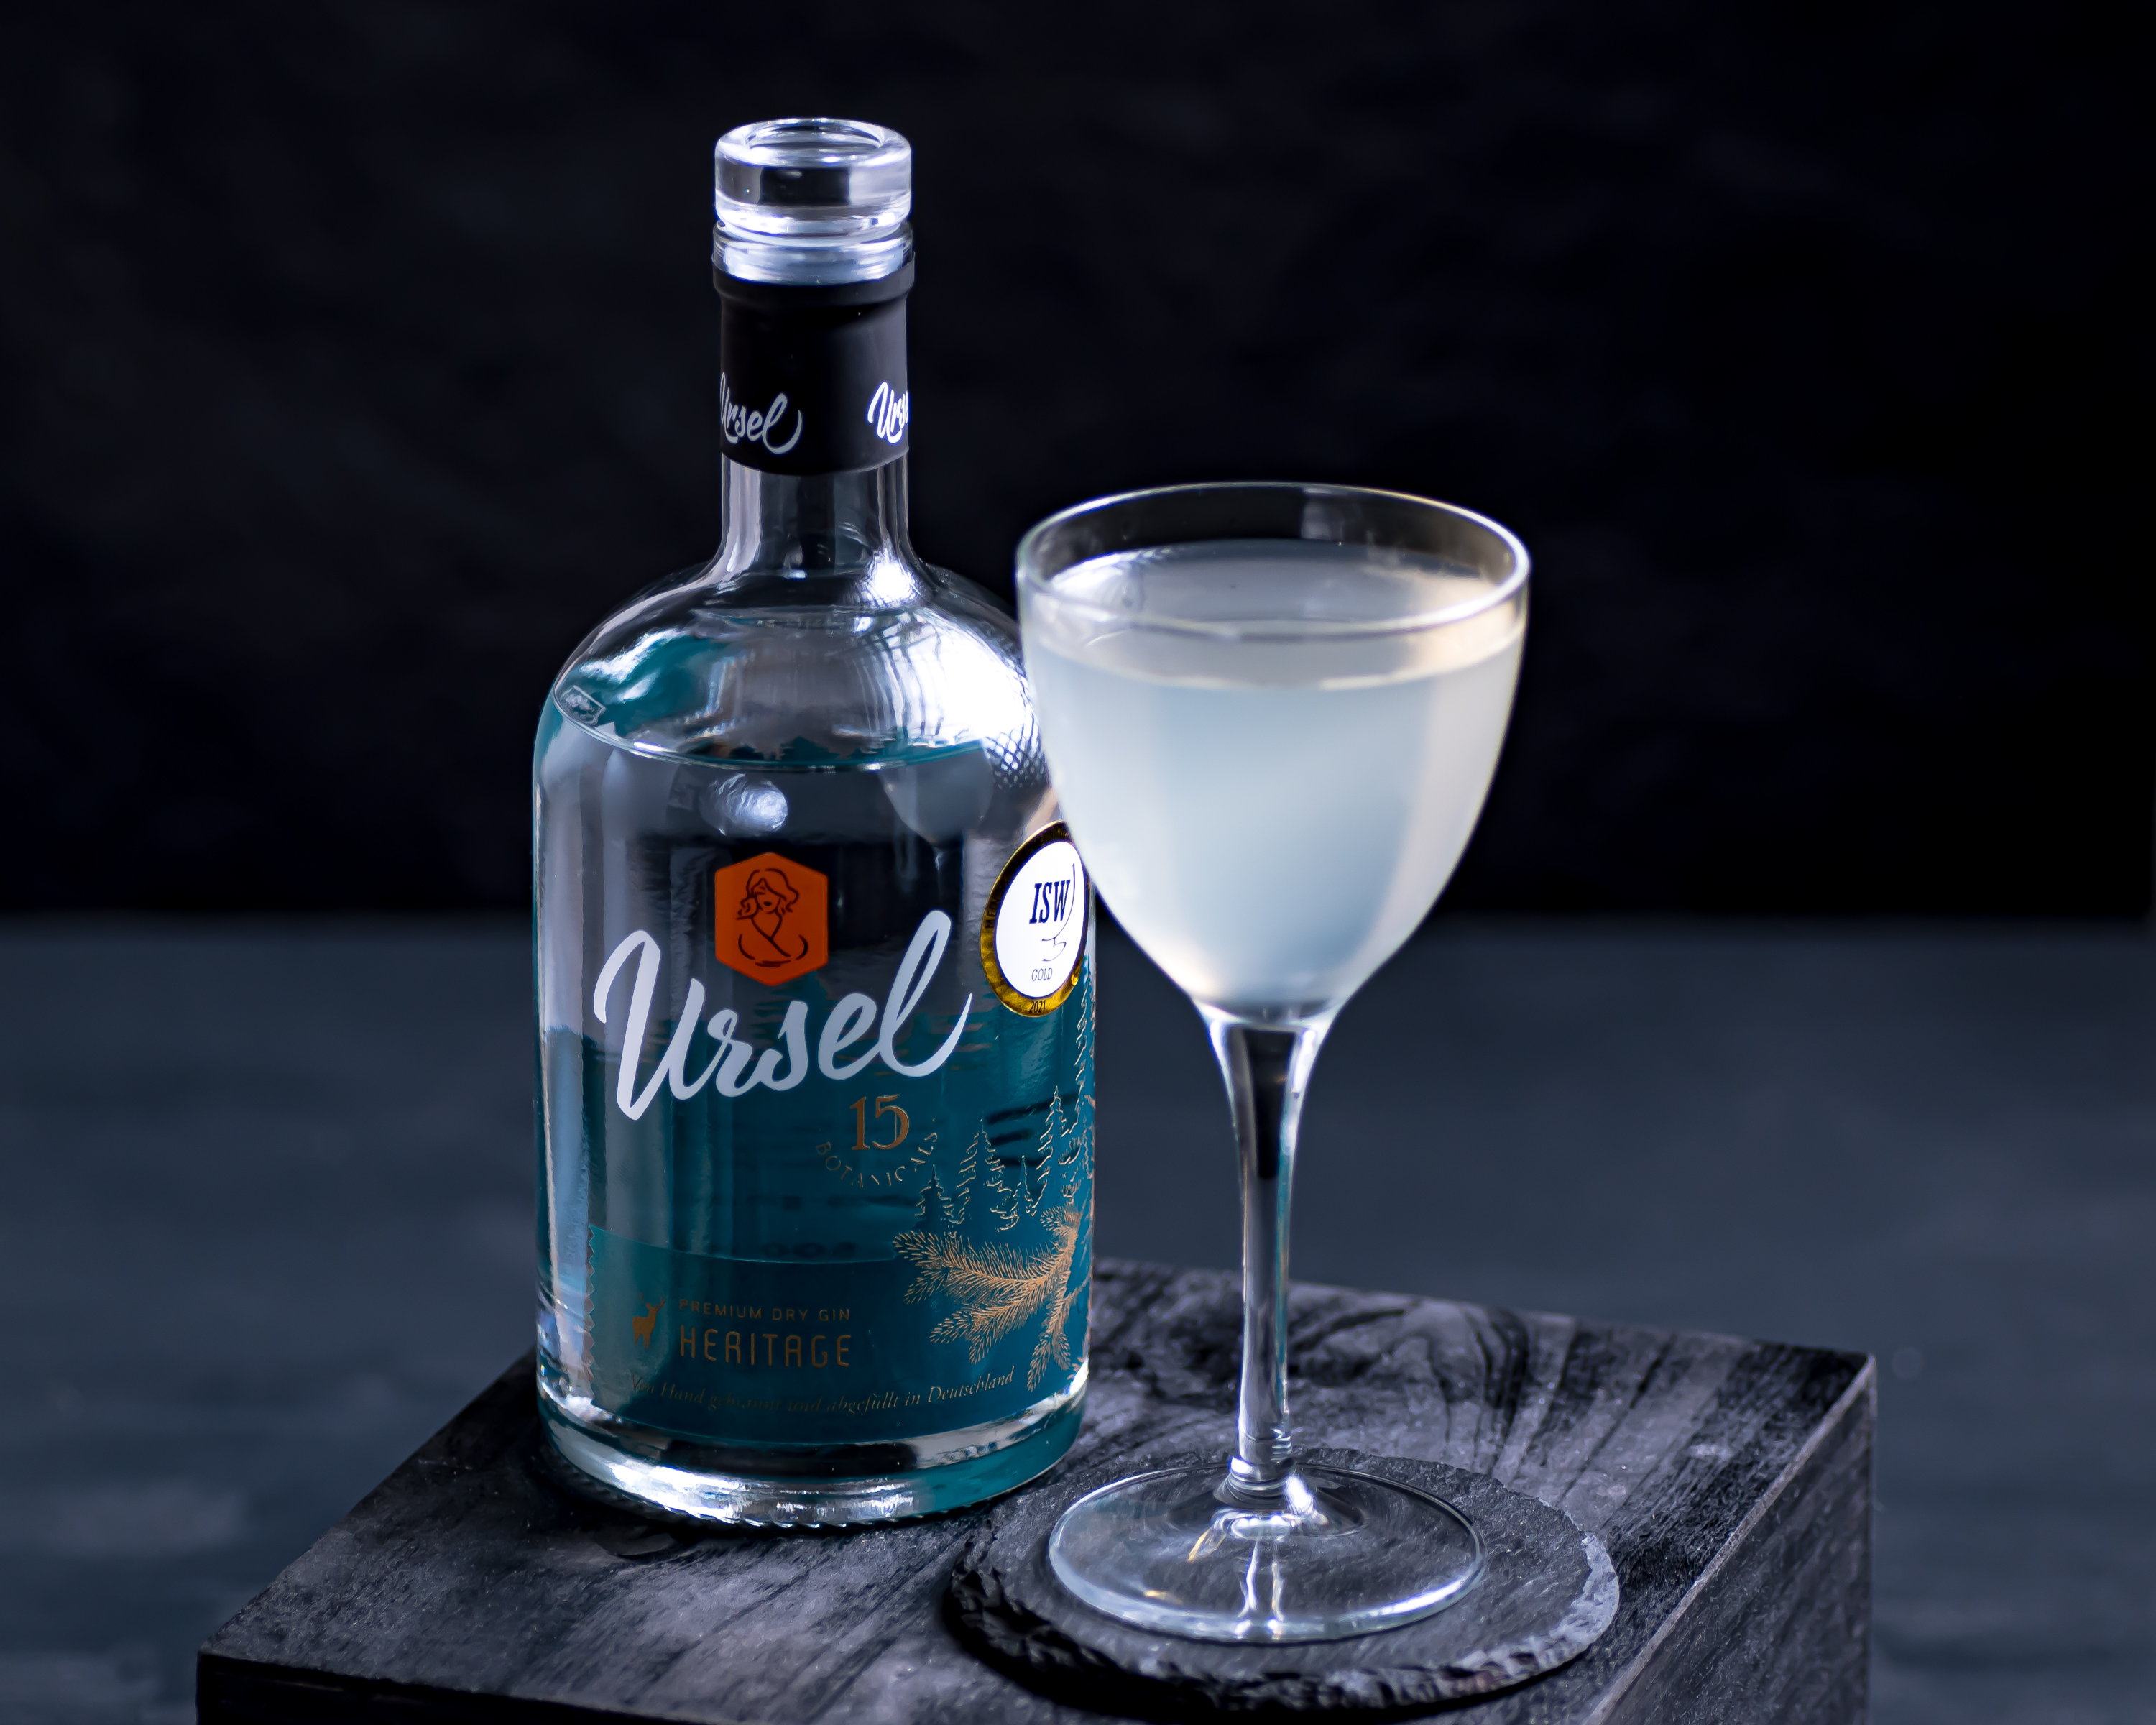 Ursel Heritage Gin im Martini Cocktail.